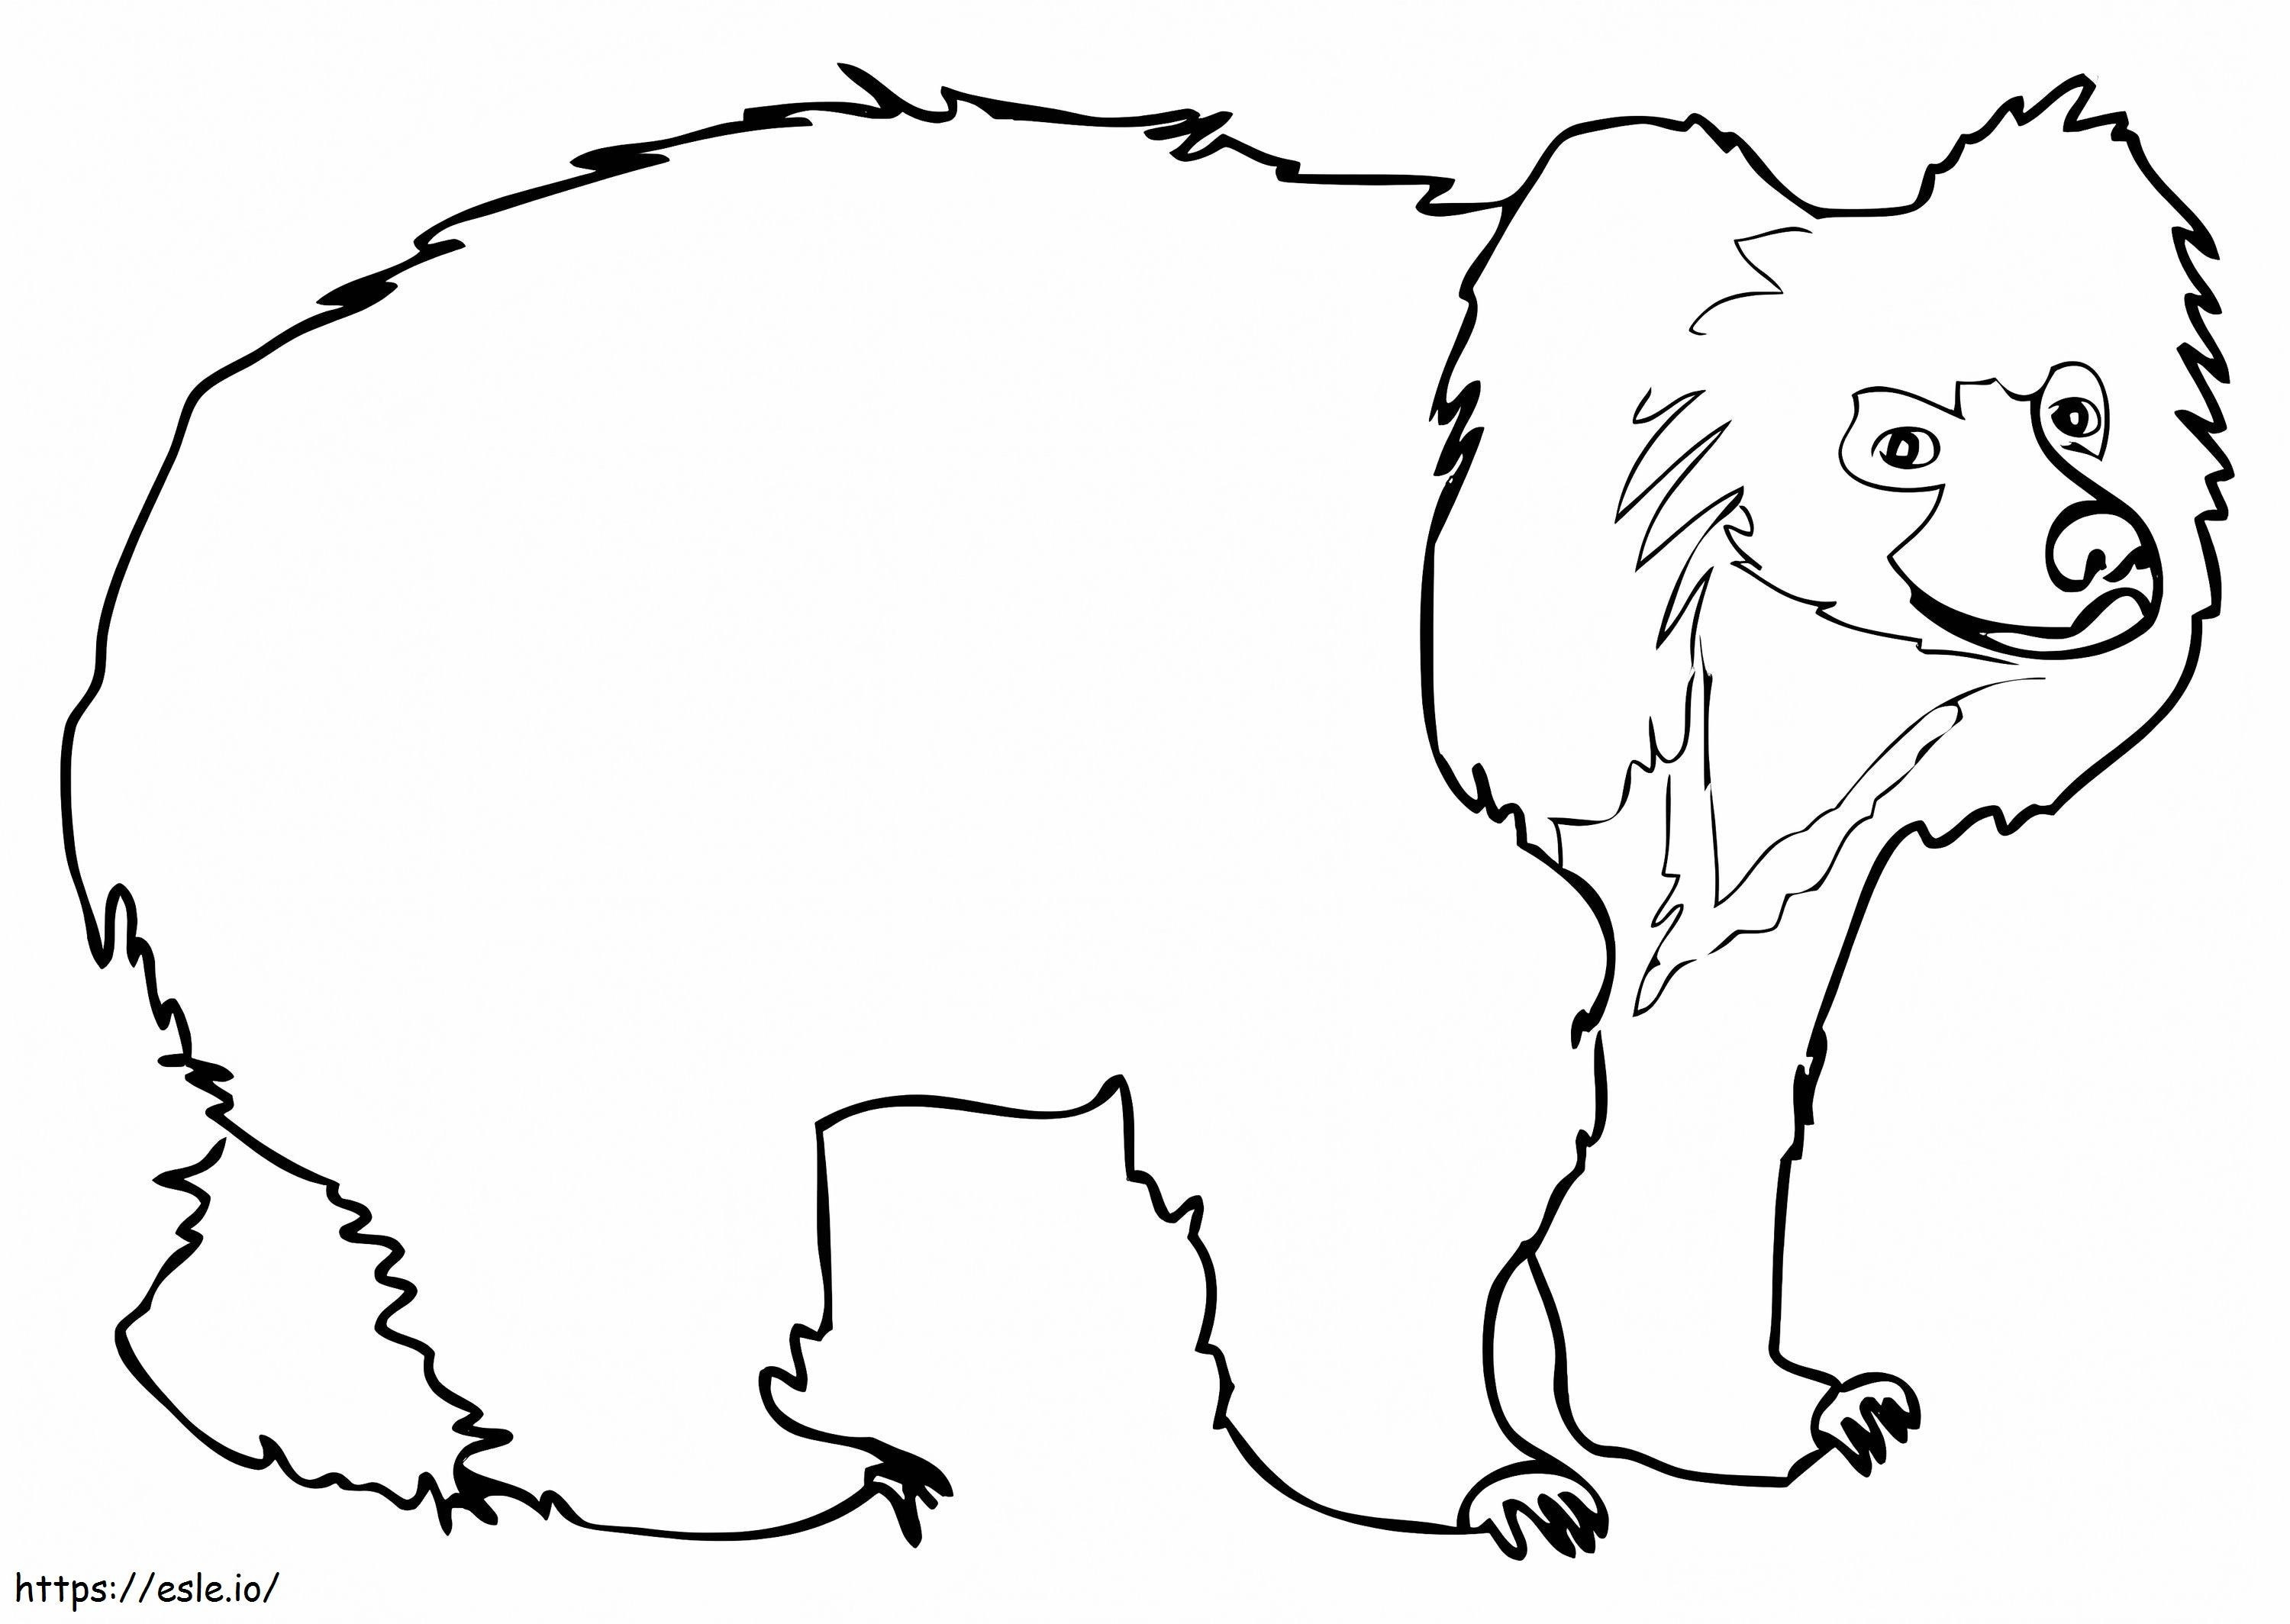 Smiling Sloth Bear coloring page